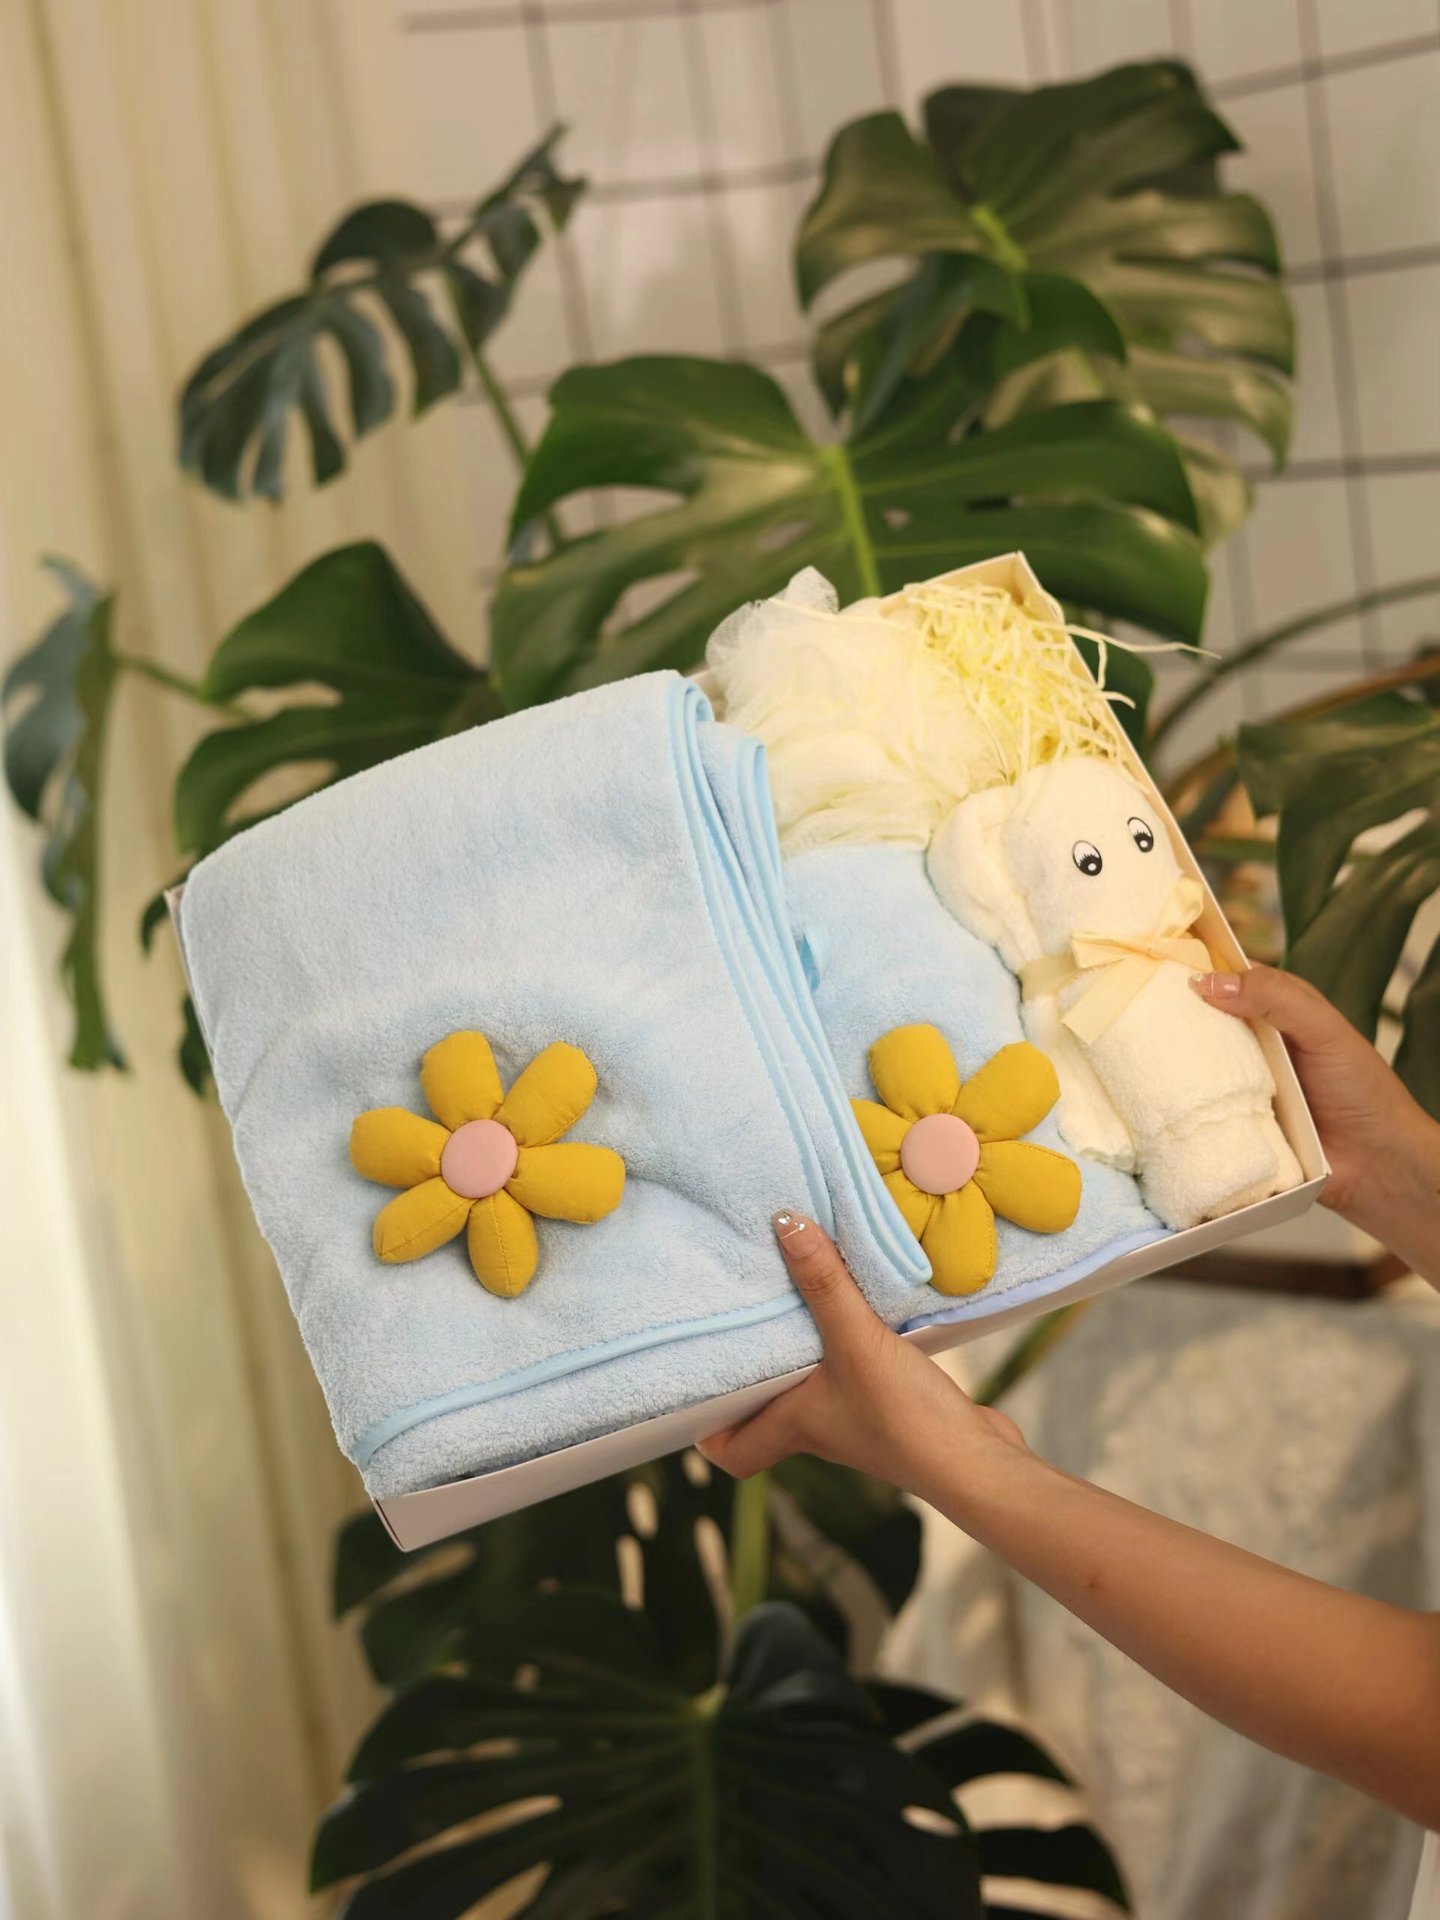 [Activity Gift] Youzhu Family Towel Gift Box Set Micron Yarn Towel Soft Absorbent Lint-Free